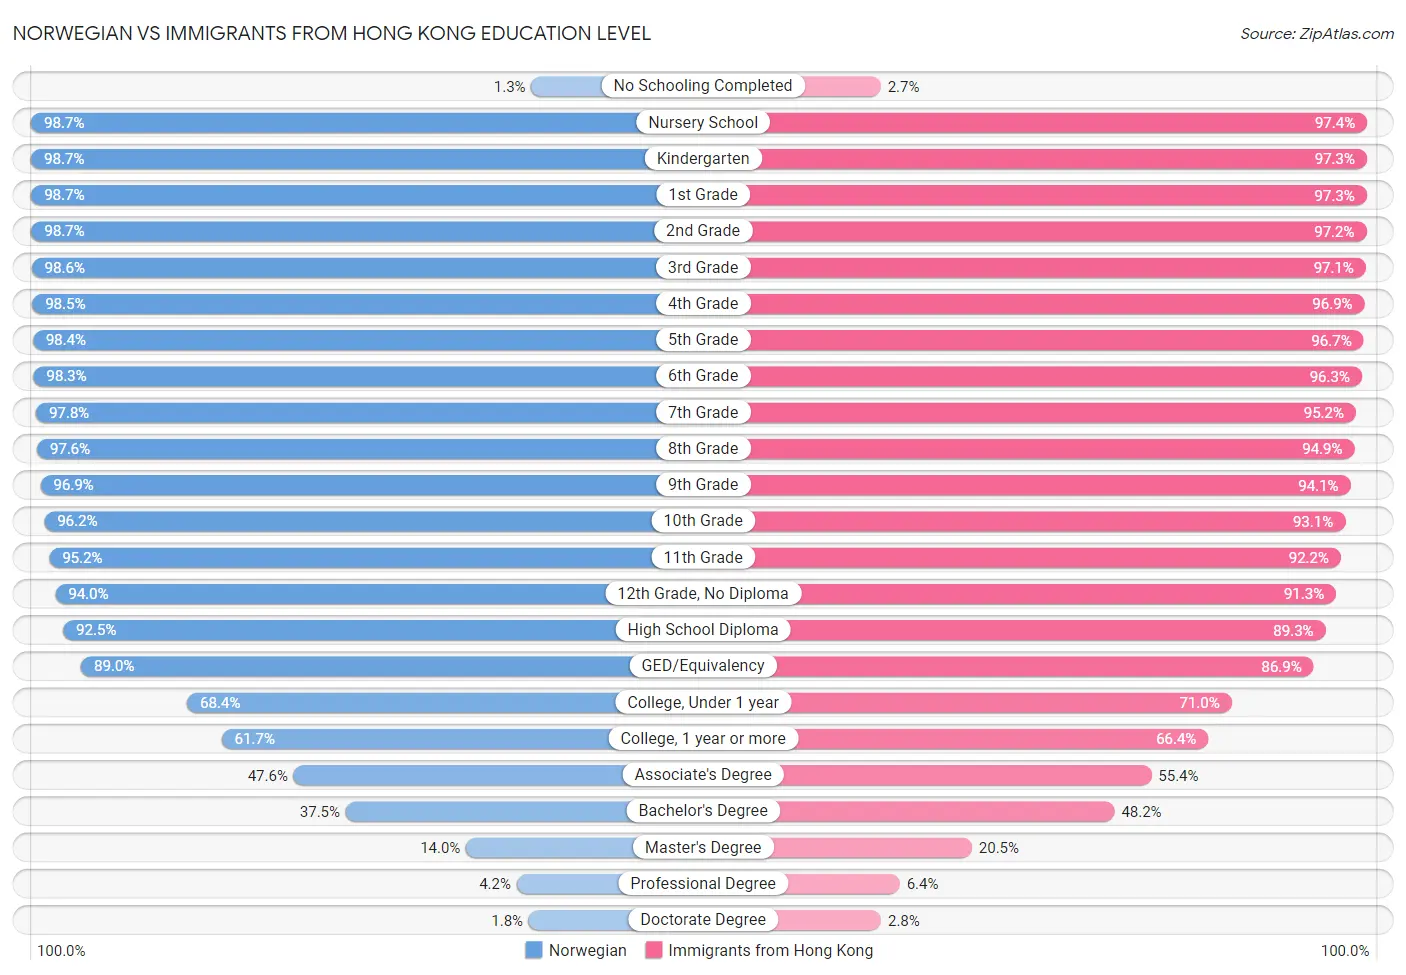 Norwegian vs Immigrants from Hong Kong Education Level